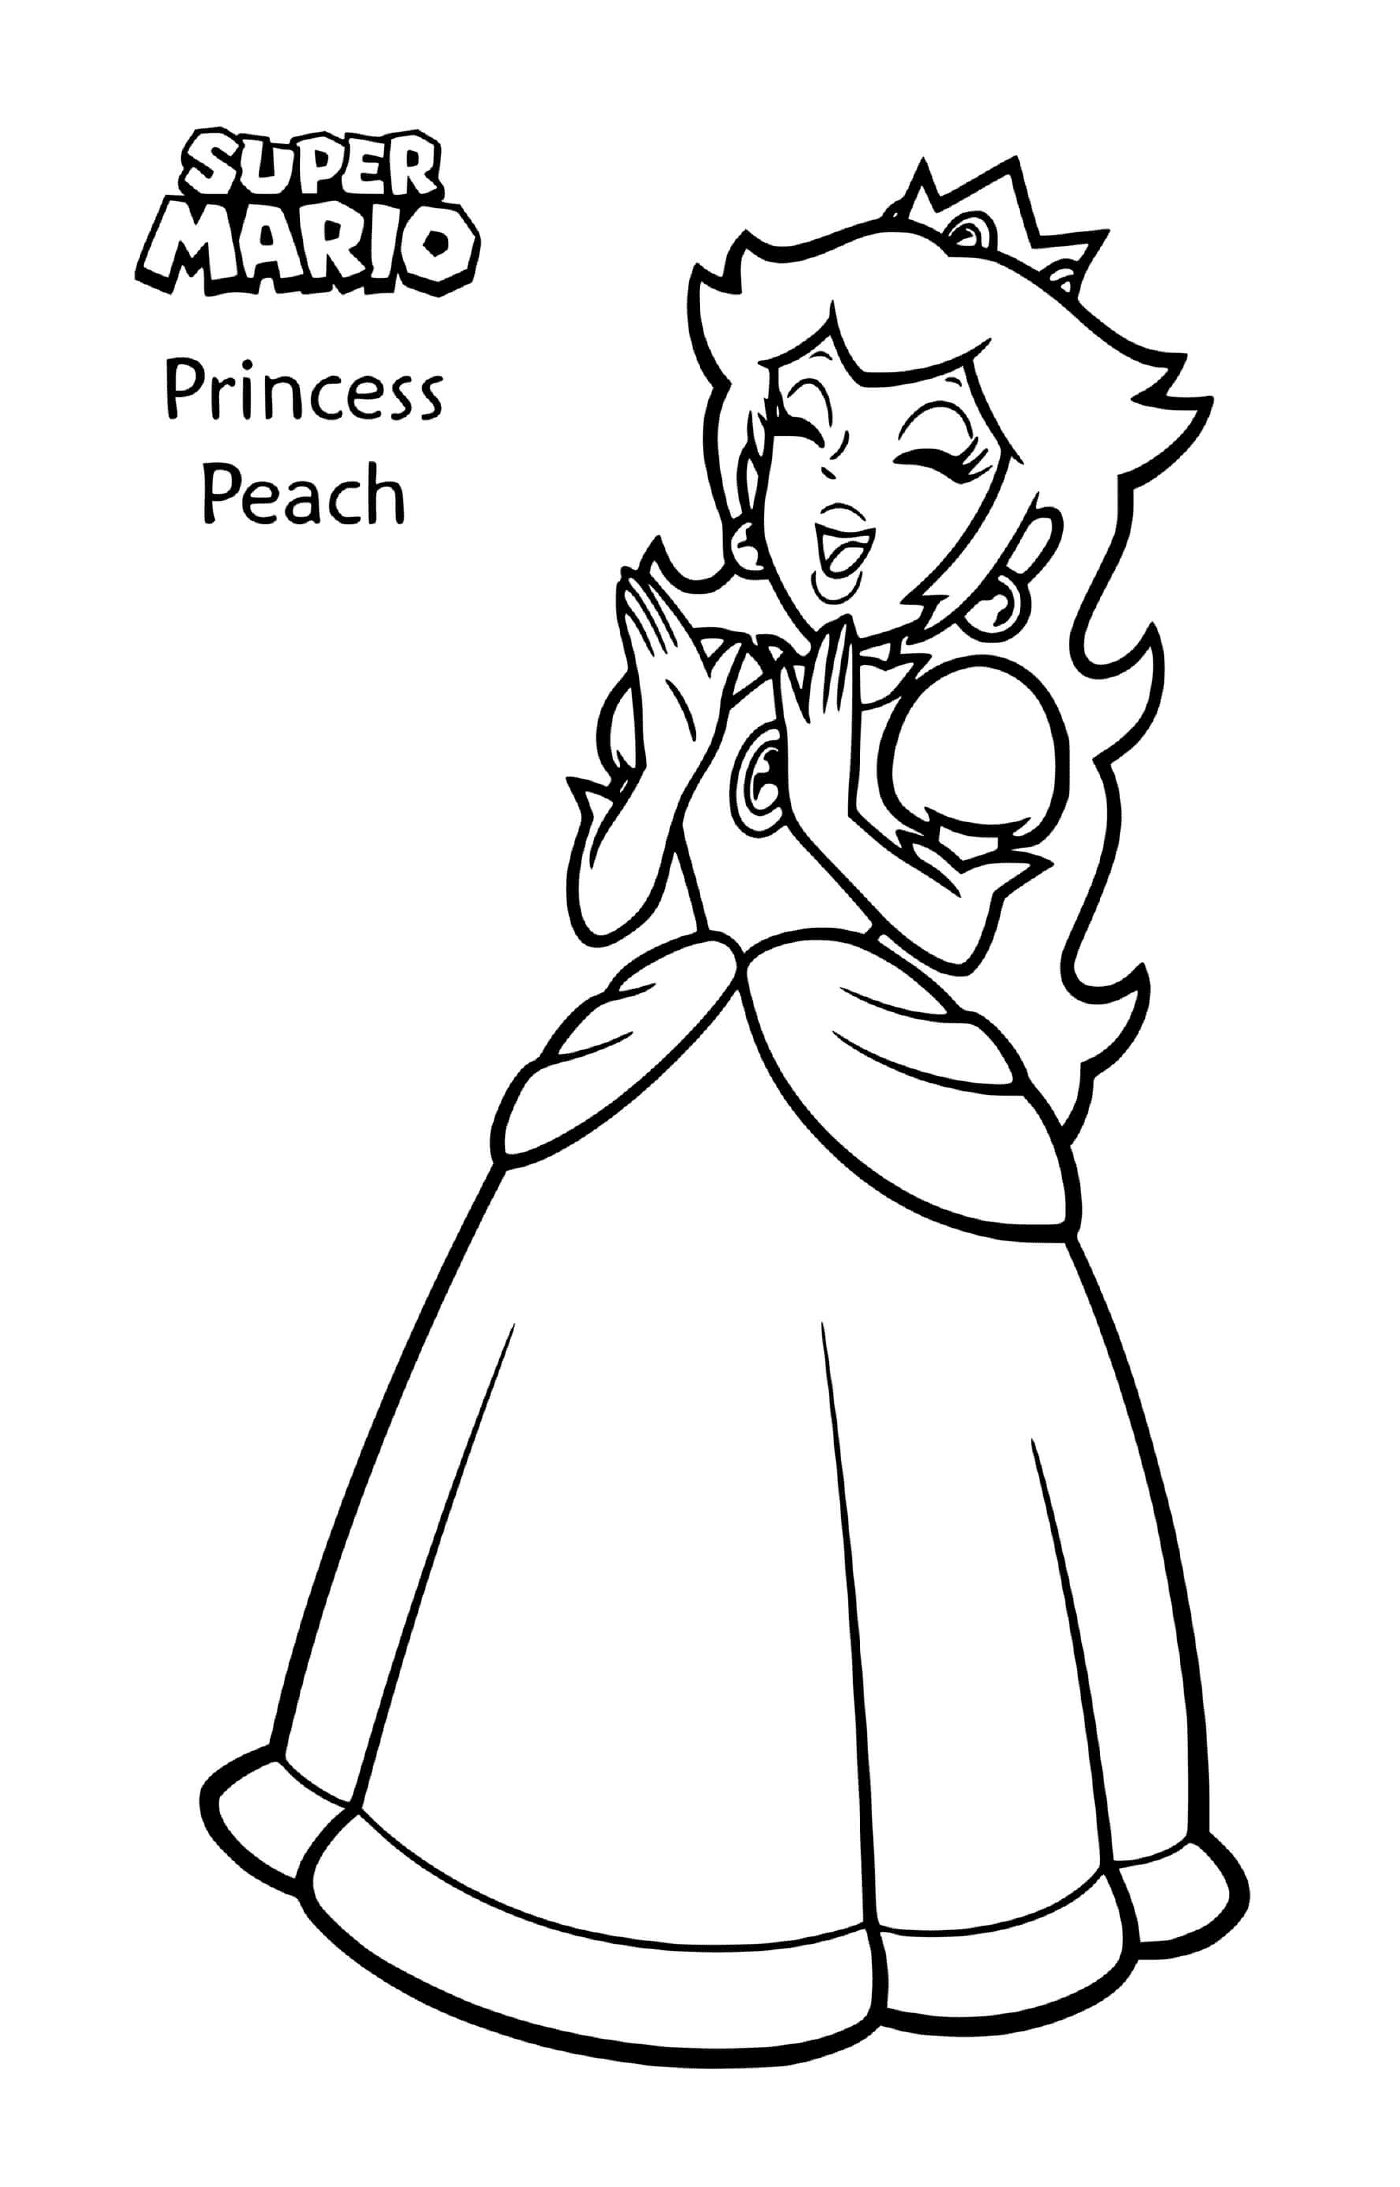 princesse peach est excitee et tape des mains